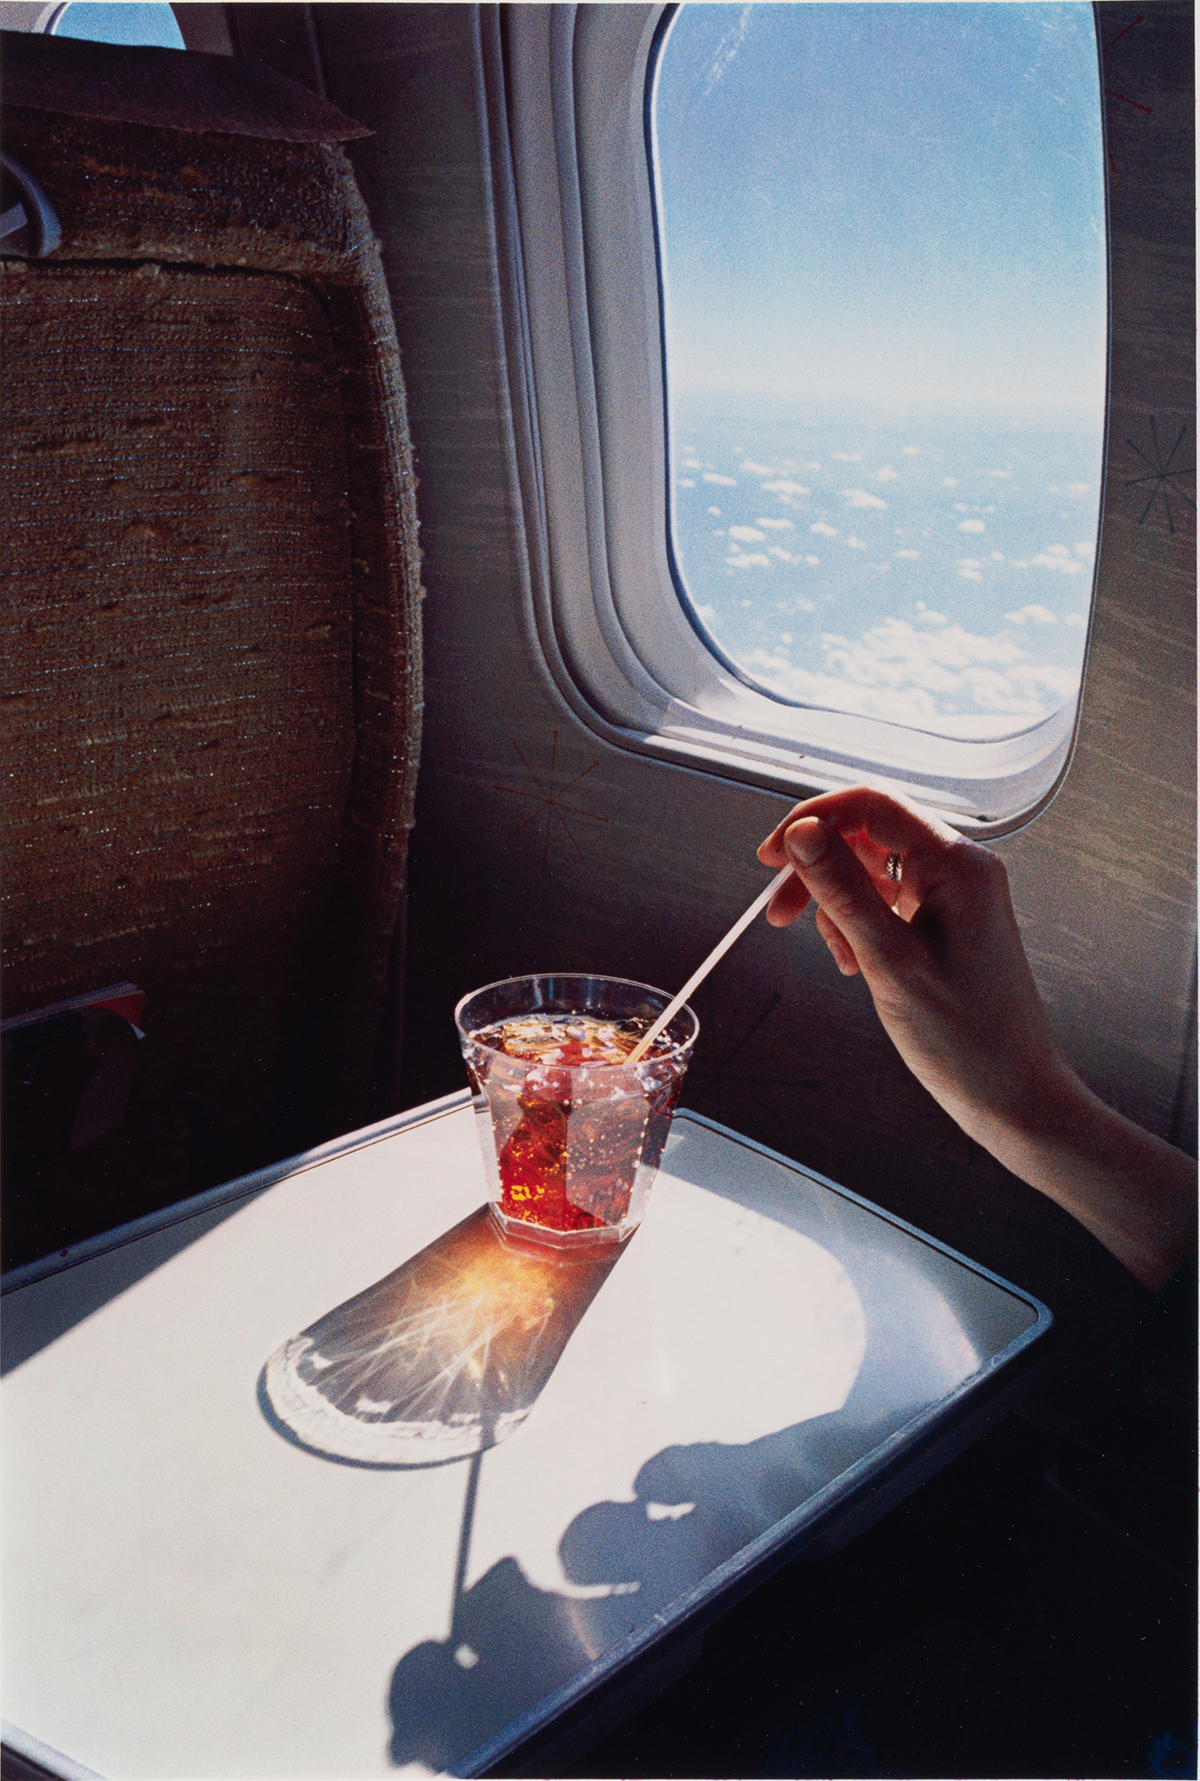 Hand stirring a glass on an aeroplane by photographer William Eggleston